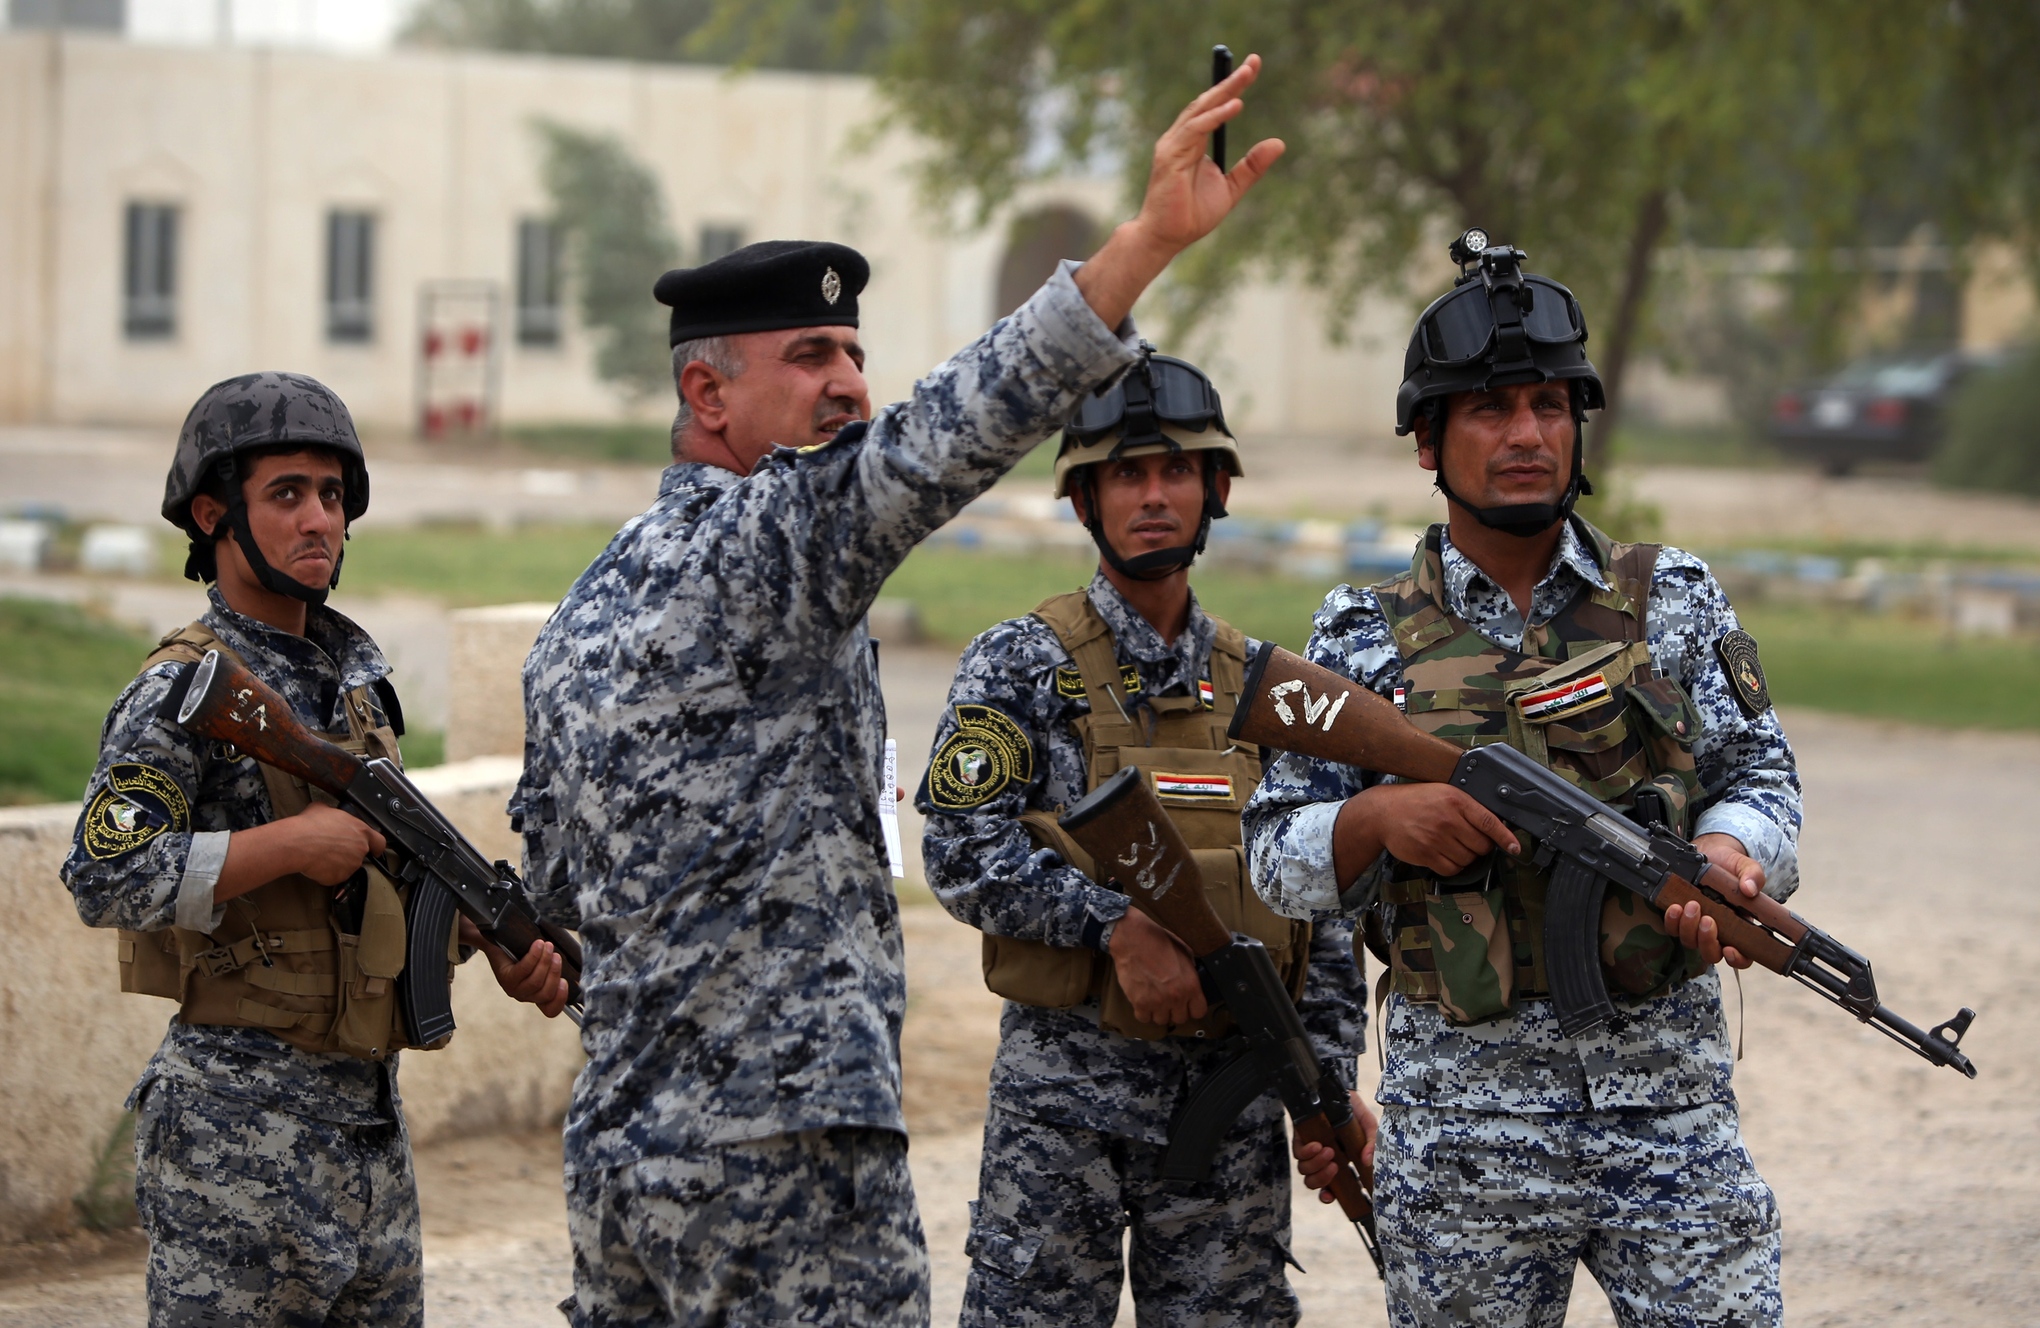 IraqiPolice.jpg